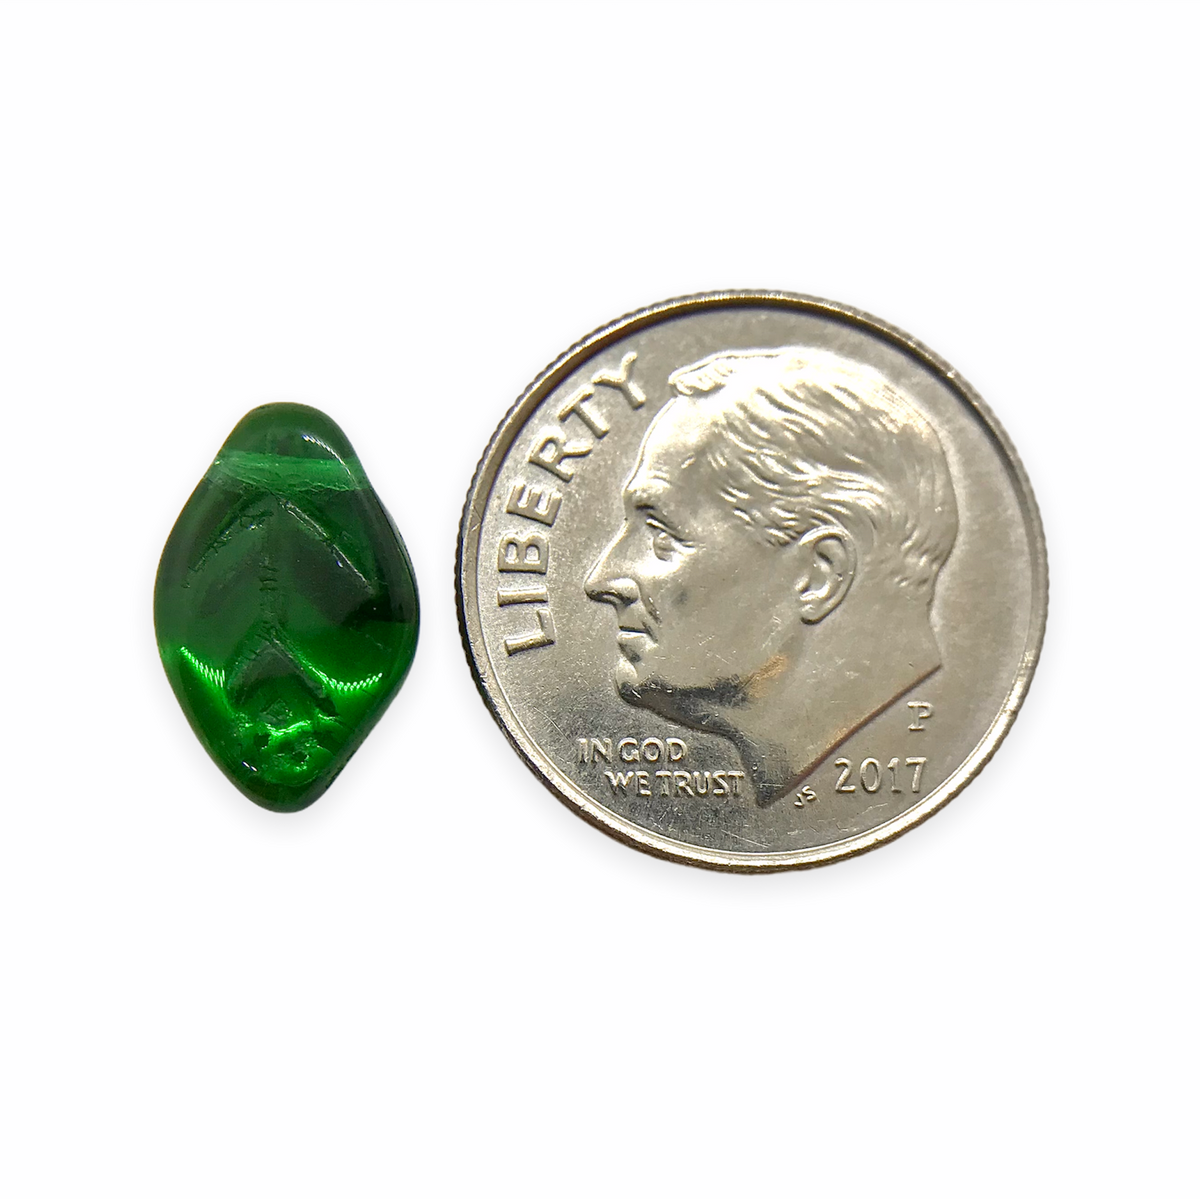 Czech glass leaf beads 25pc translucent emerald green AB 11x8 – Orange  Grove Beads